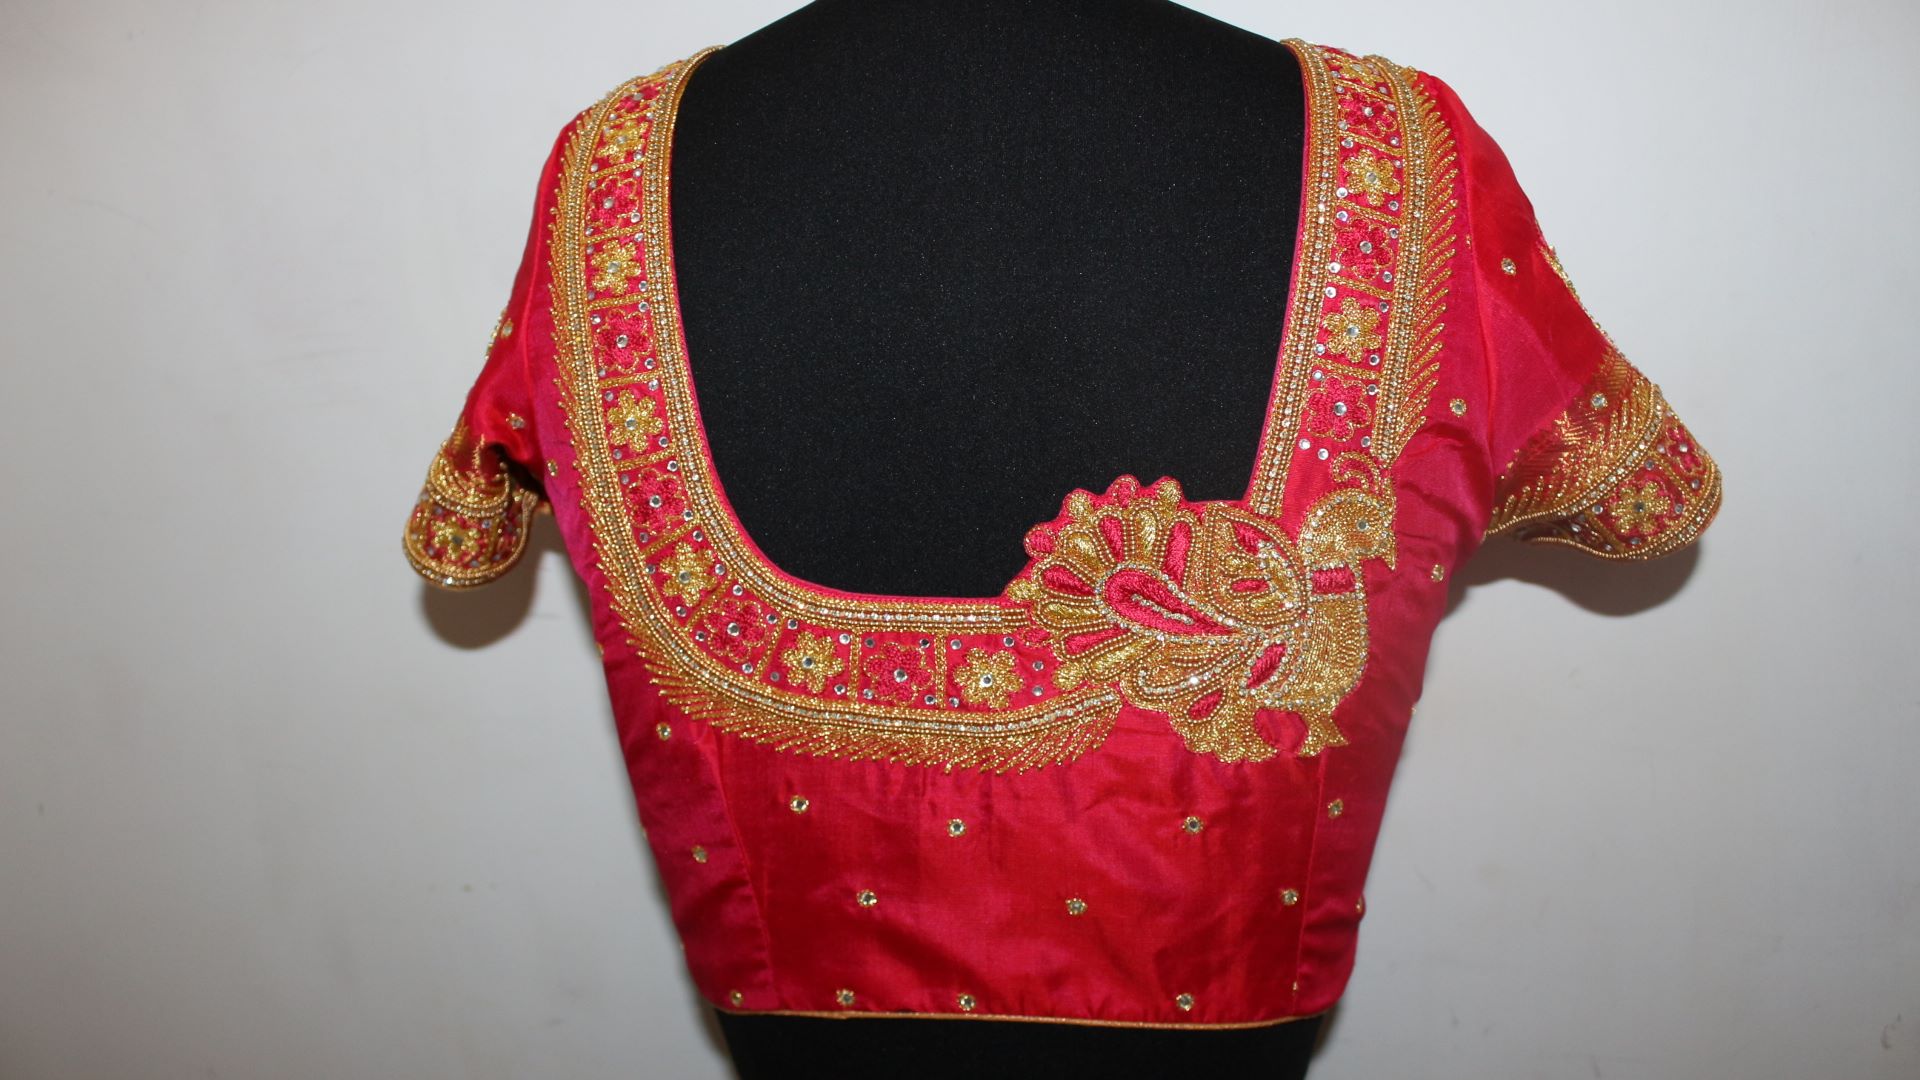  Rosado blouse designs-img8